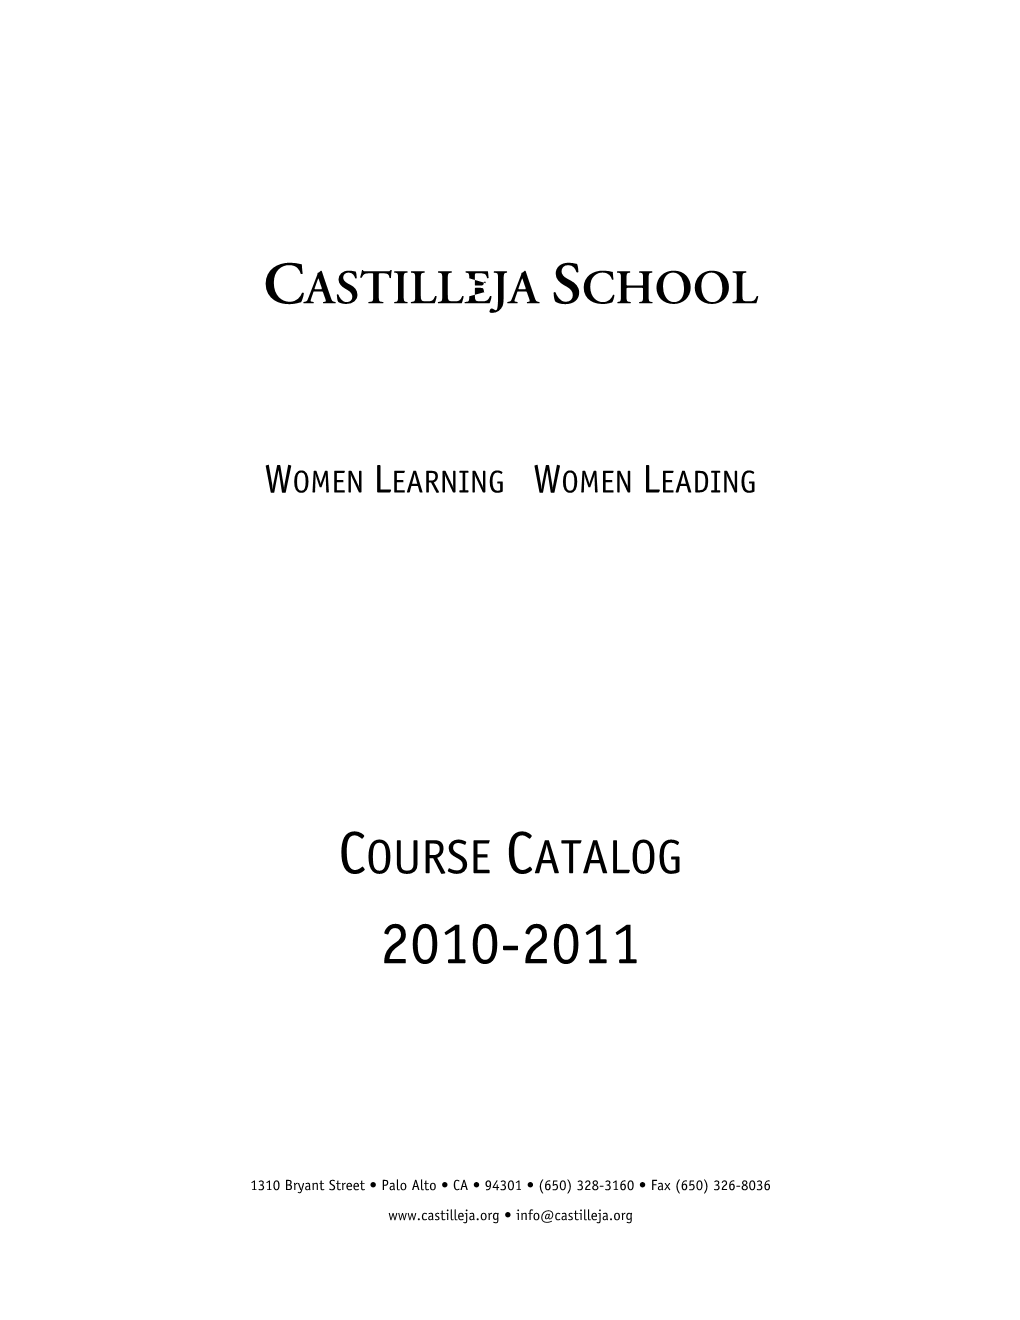 Course Catalog 2010-2011